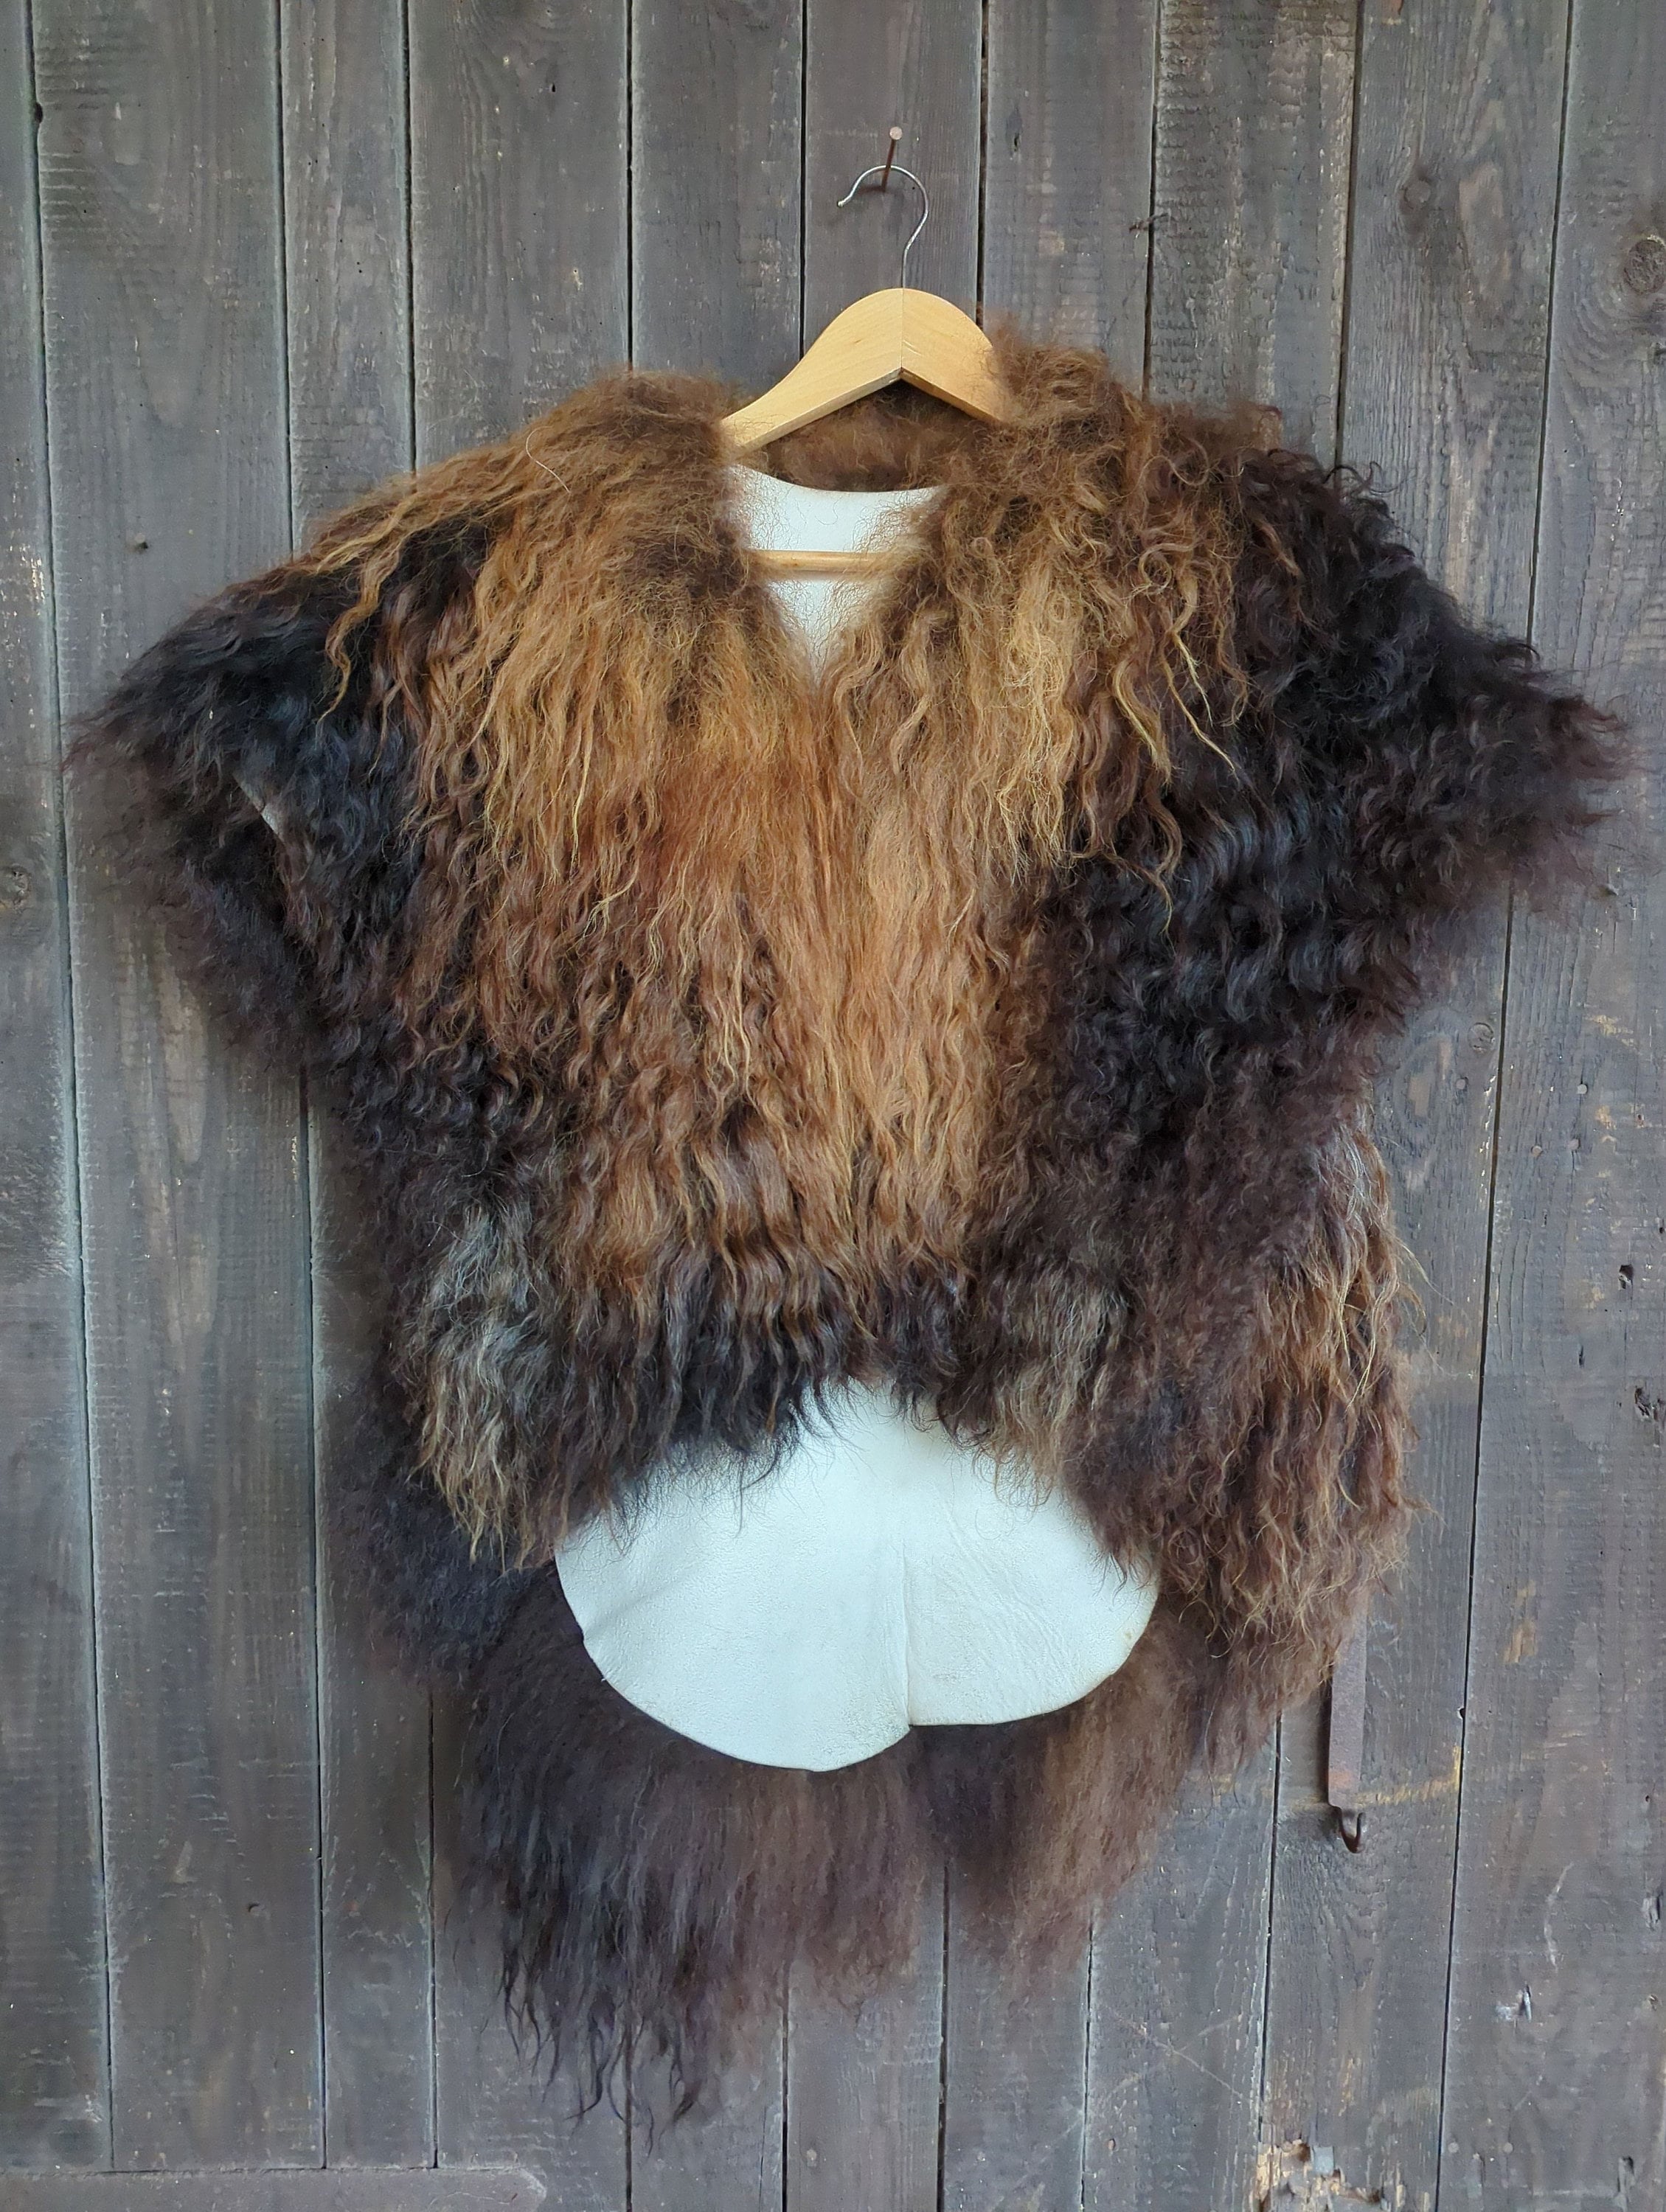 Pagan Fur Mantle Shoulder Fur for Vikings Fur Cape Cloak Shieldmaiden Fur  Viking Celtic Wedding Cape Barbarian Furs 